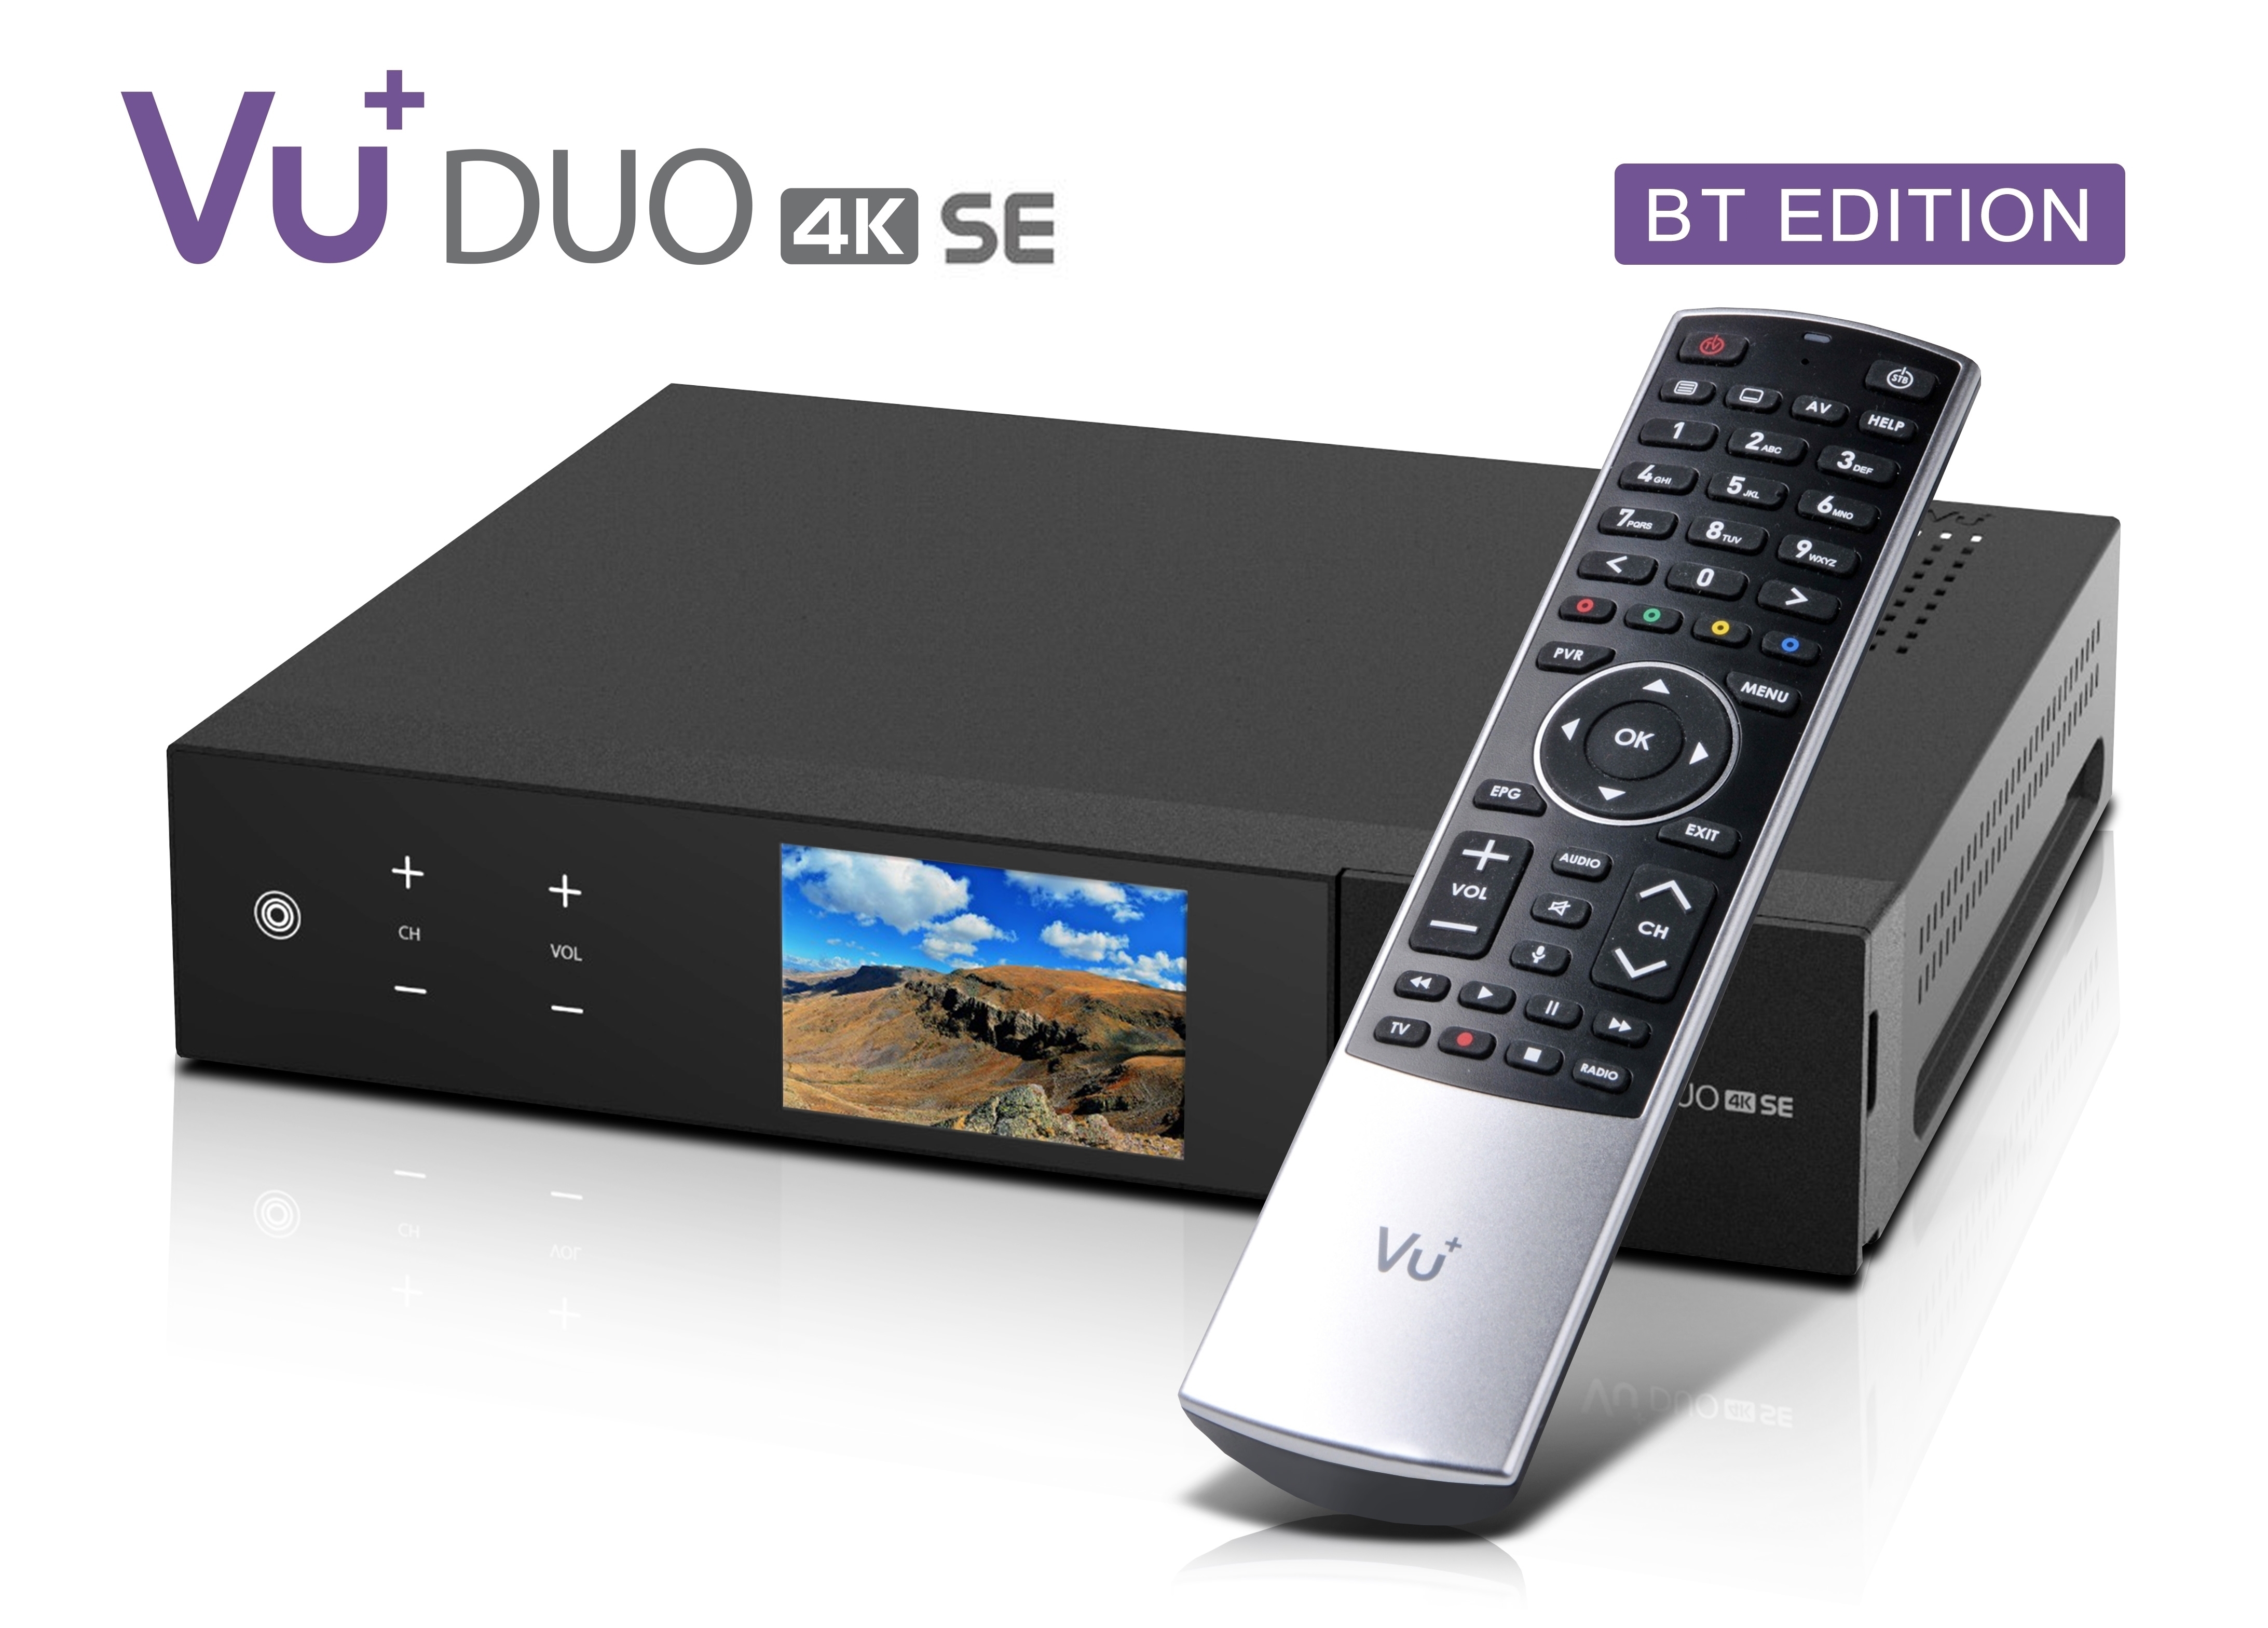 VU+ Duo 4K SE BT 1x DVB-S2X FBC Twin / 1x DVB-C FBC Tuner 500 GB HDD Linux Receiver UHD 2160p